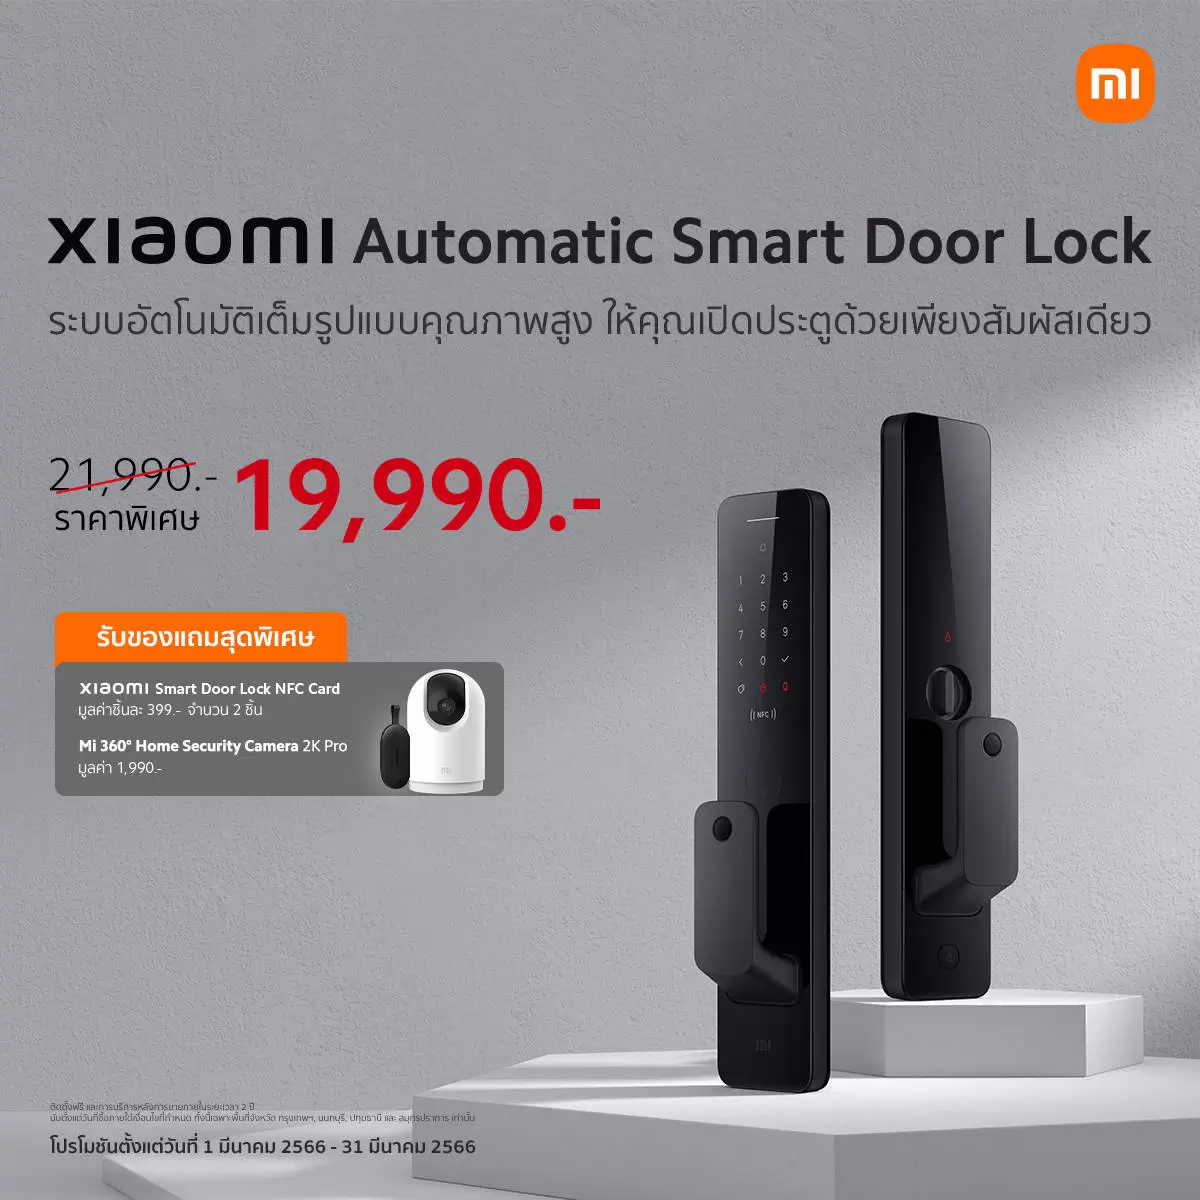 Xiaomi Automatic Smart Door Lock | Xiaomi | รวมข้อมูล AIoT รุ่นใหม่ของ Xiaomi นาฬิกา, หูฟัง และ หุ่นยนต์ดูดฝุ่น ราคาและโปรโมชั่น